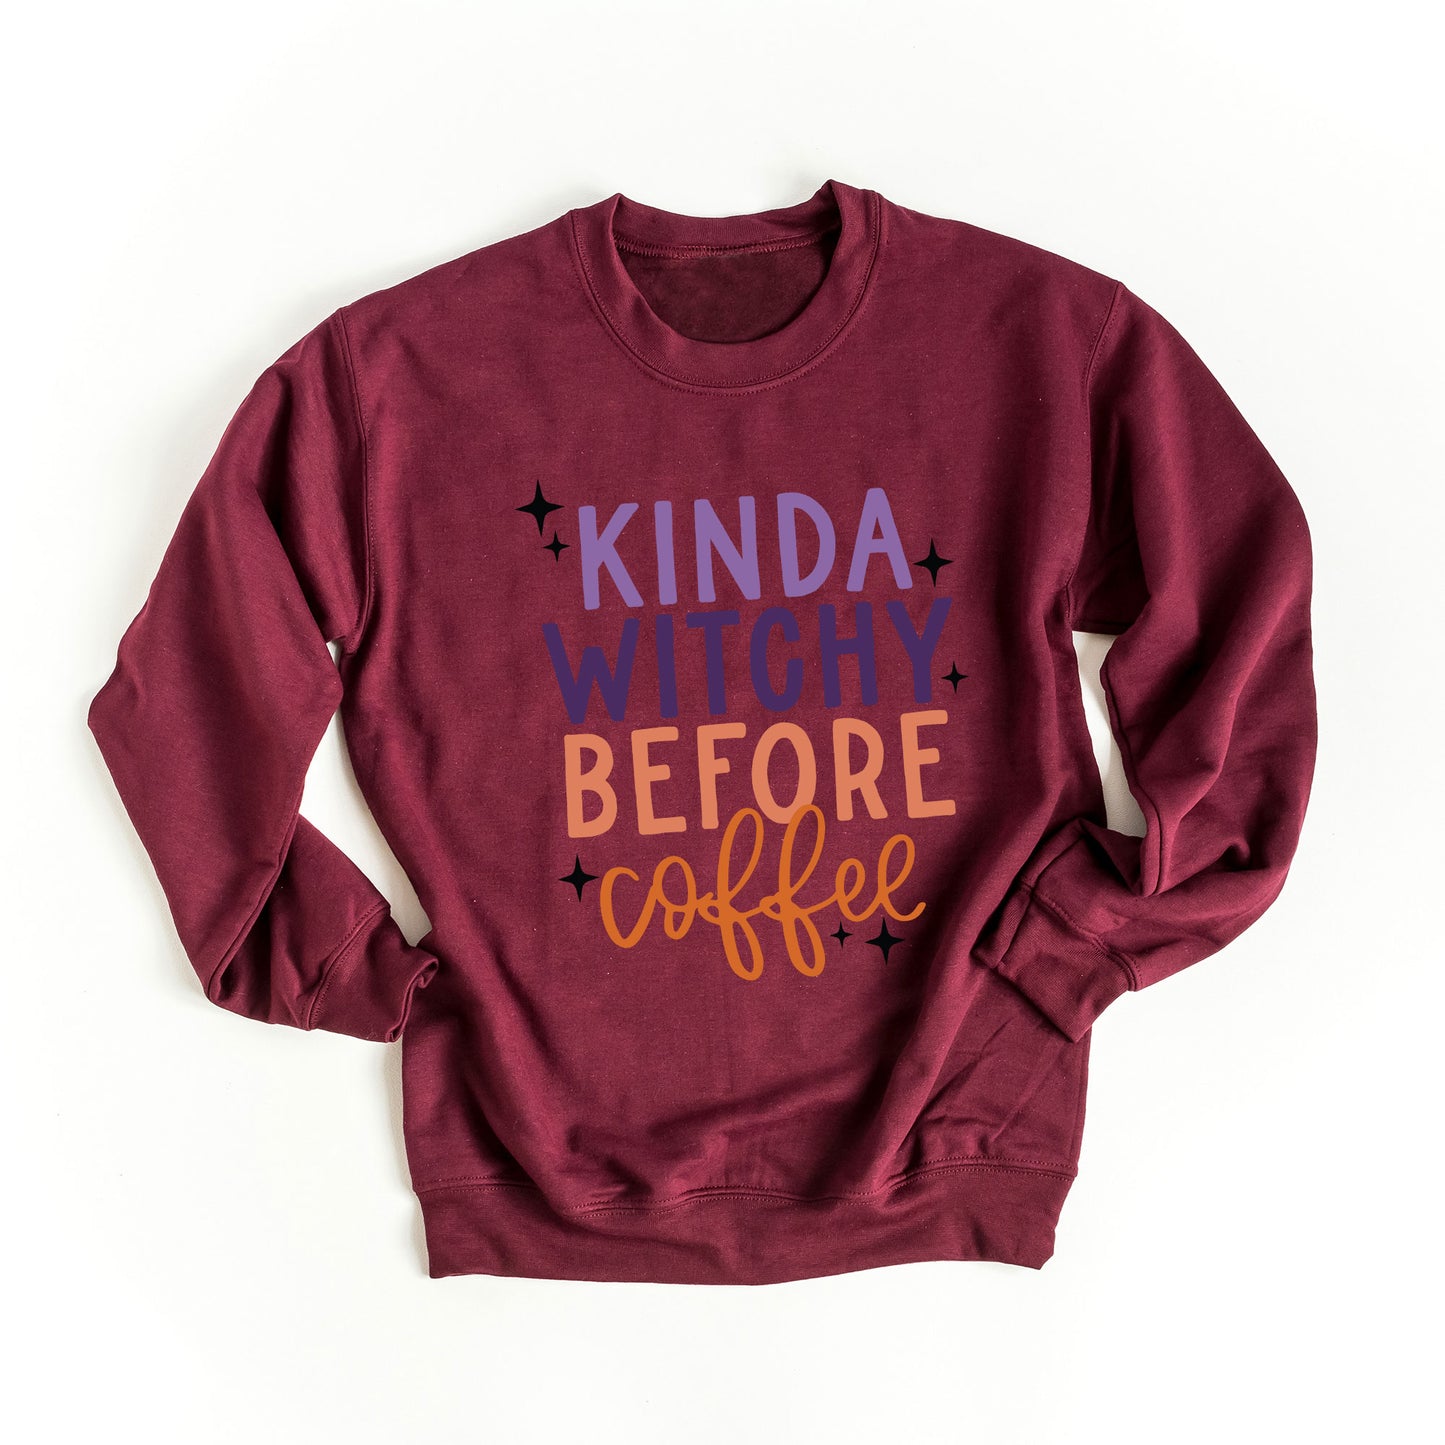 Kinda Witchy Before Coffee | Sweatshirt